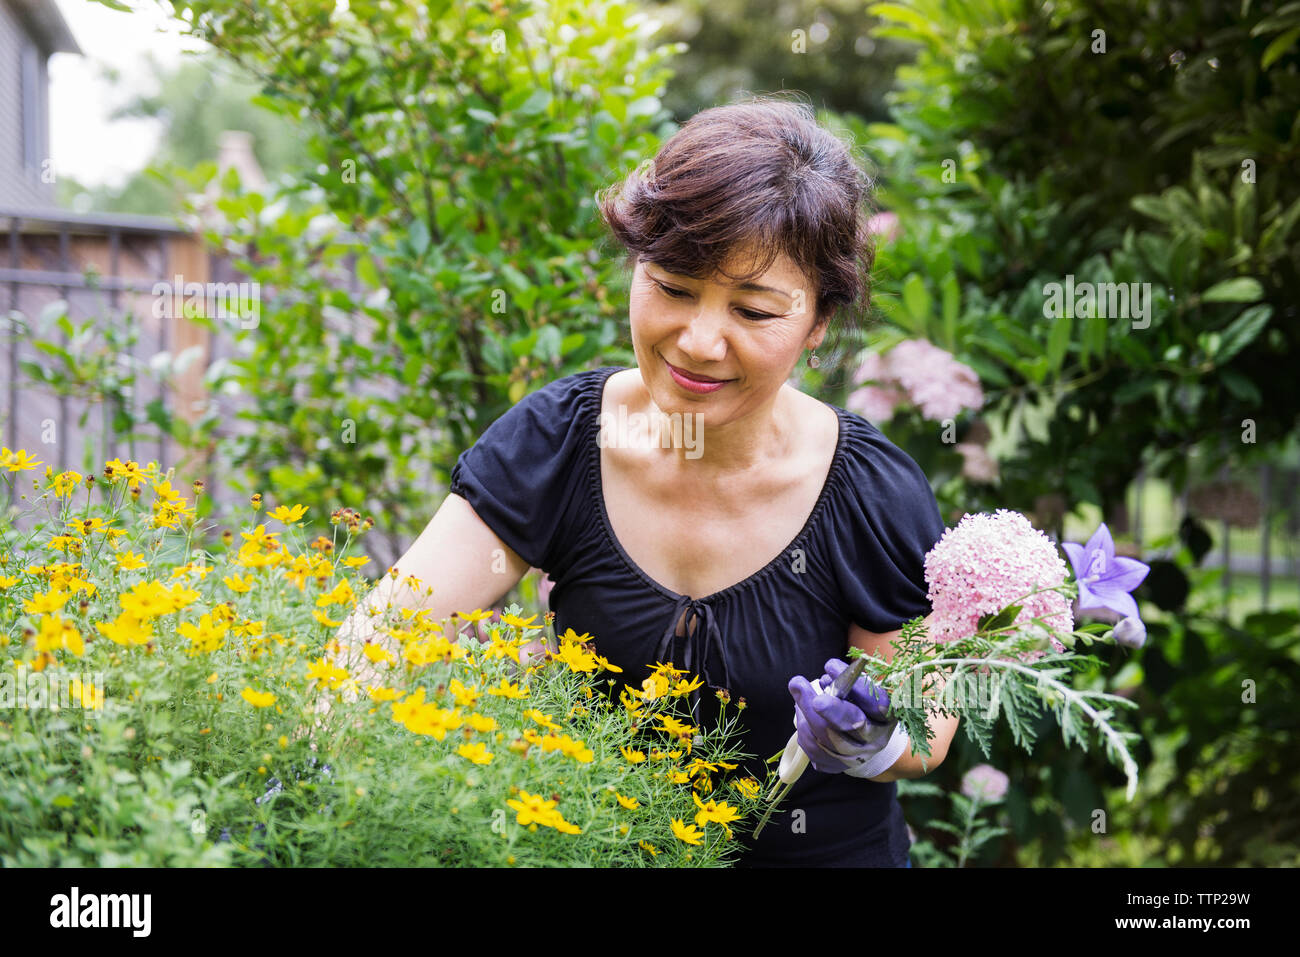 Senior woman holding flowers while gardening in backyard Stock Photo